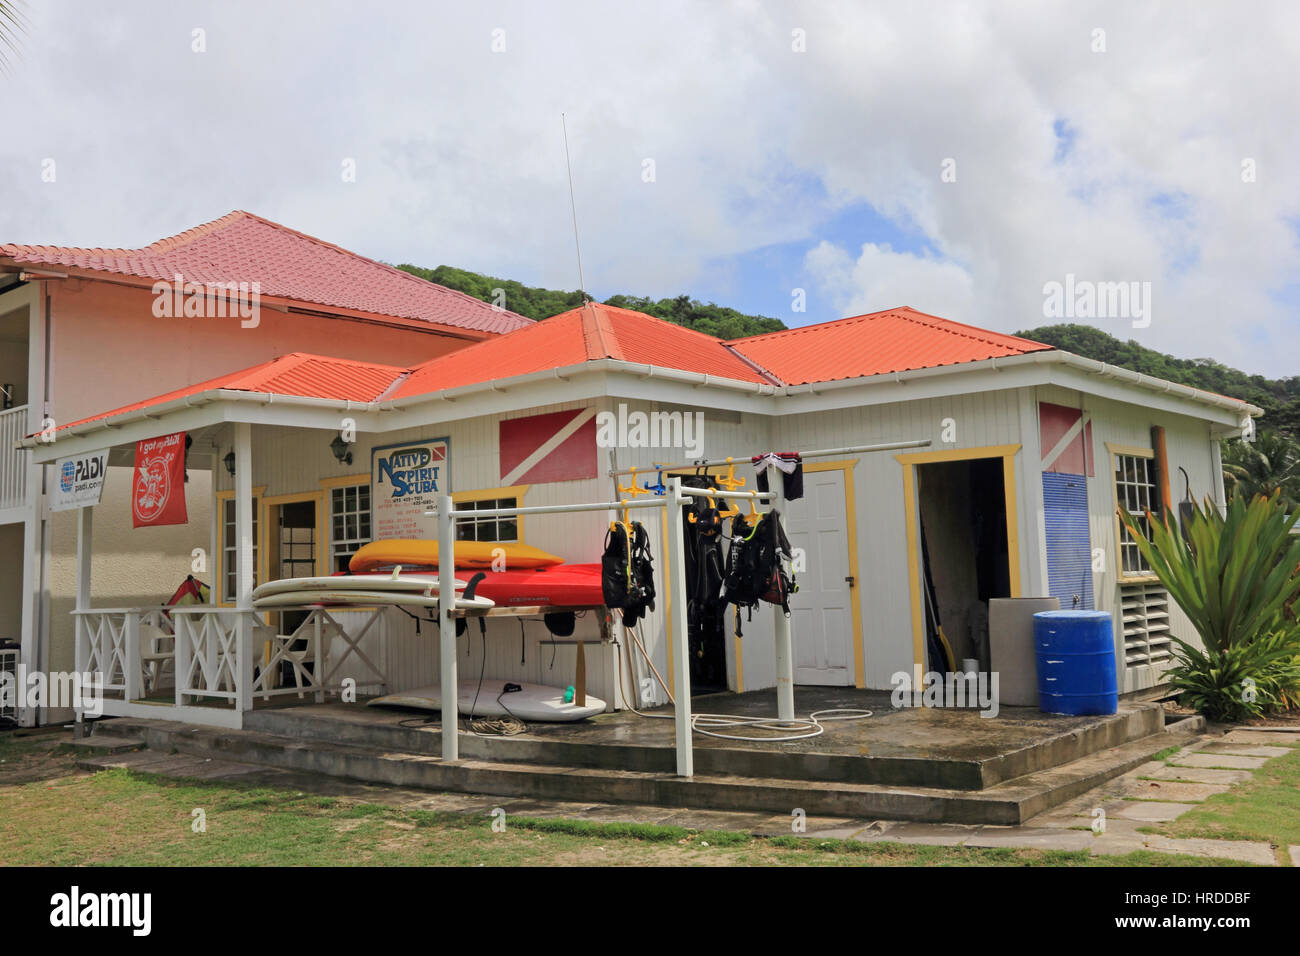 Native Spirit Scuba Dive Shop, Grand Asne beach, Grenada Stock Photo